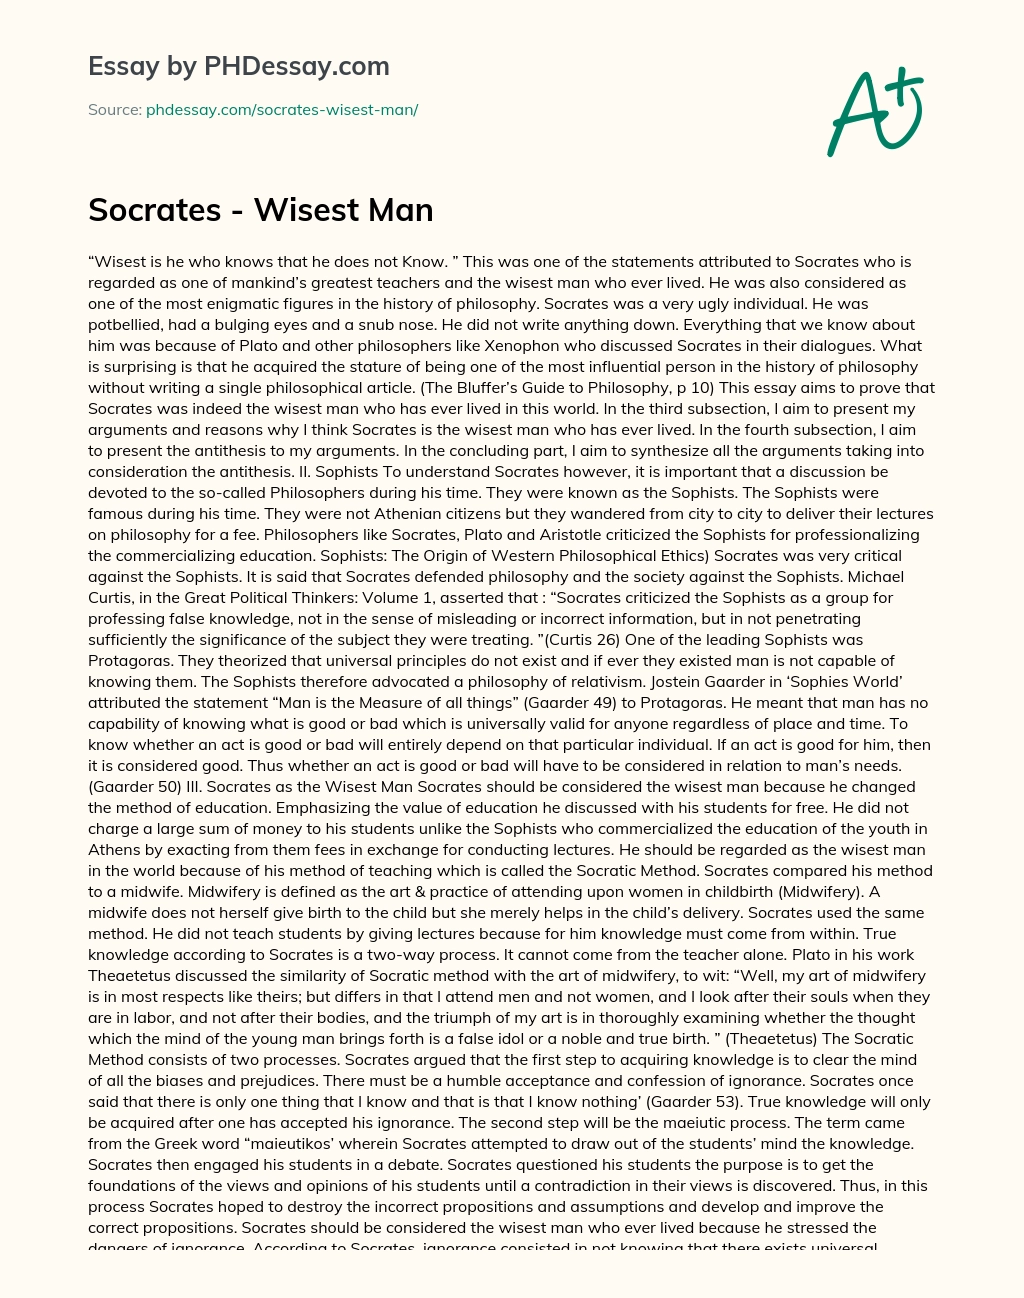 Socrates – Wisest Man essay